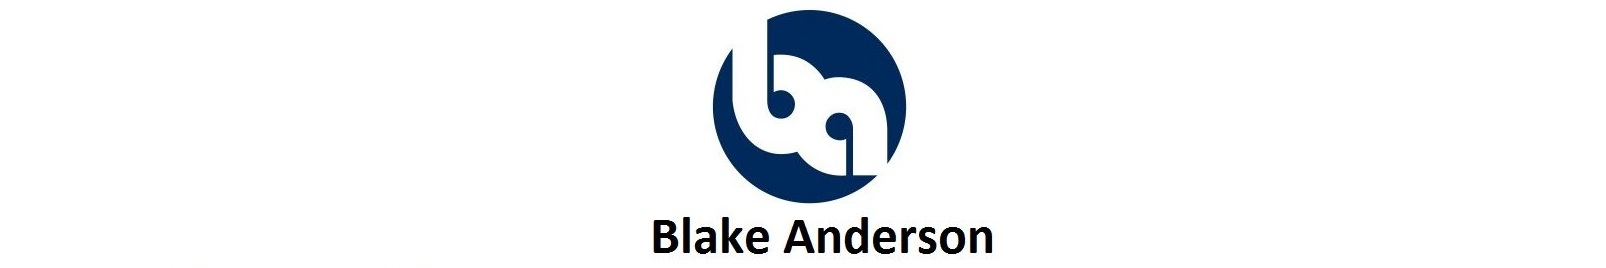 Blake Anderson Banner